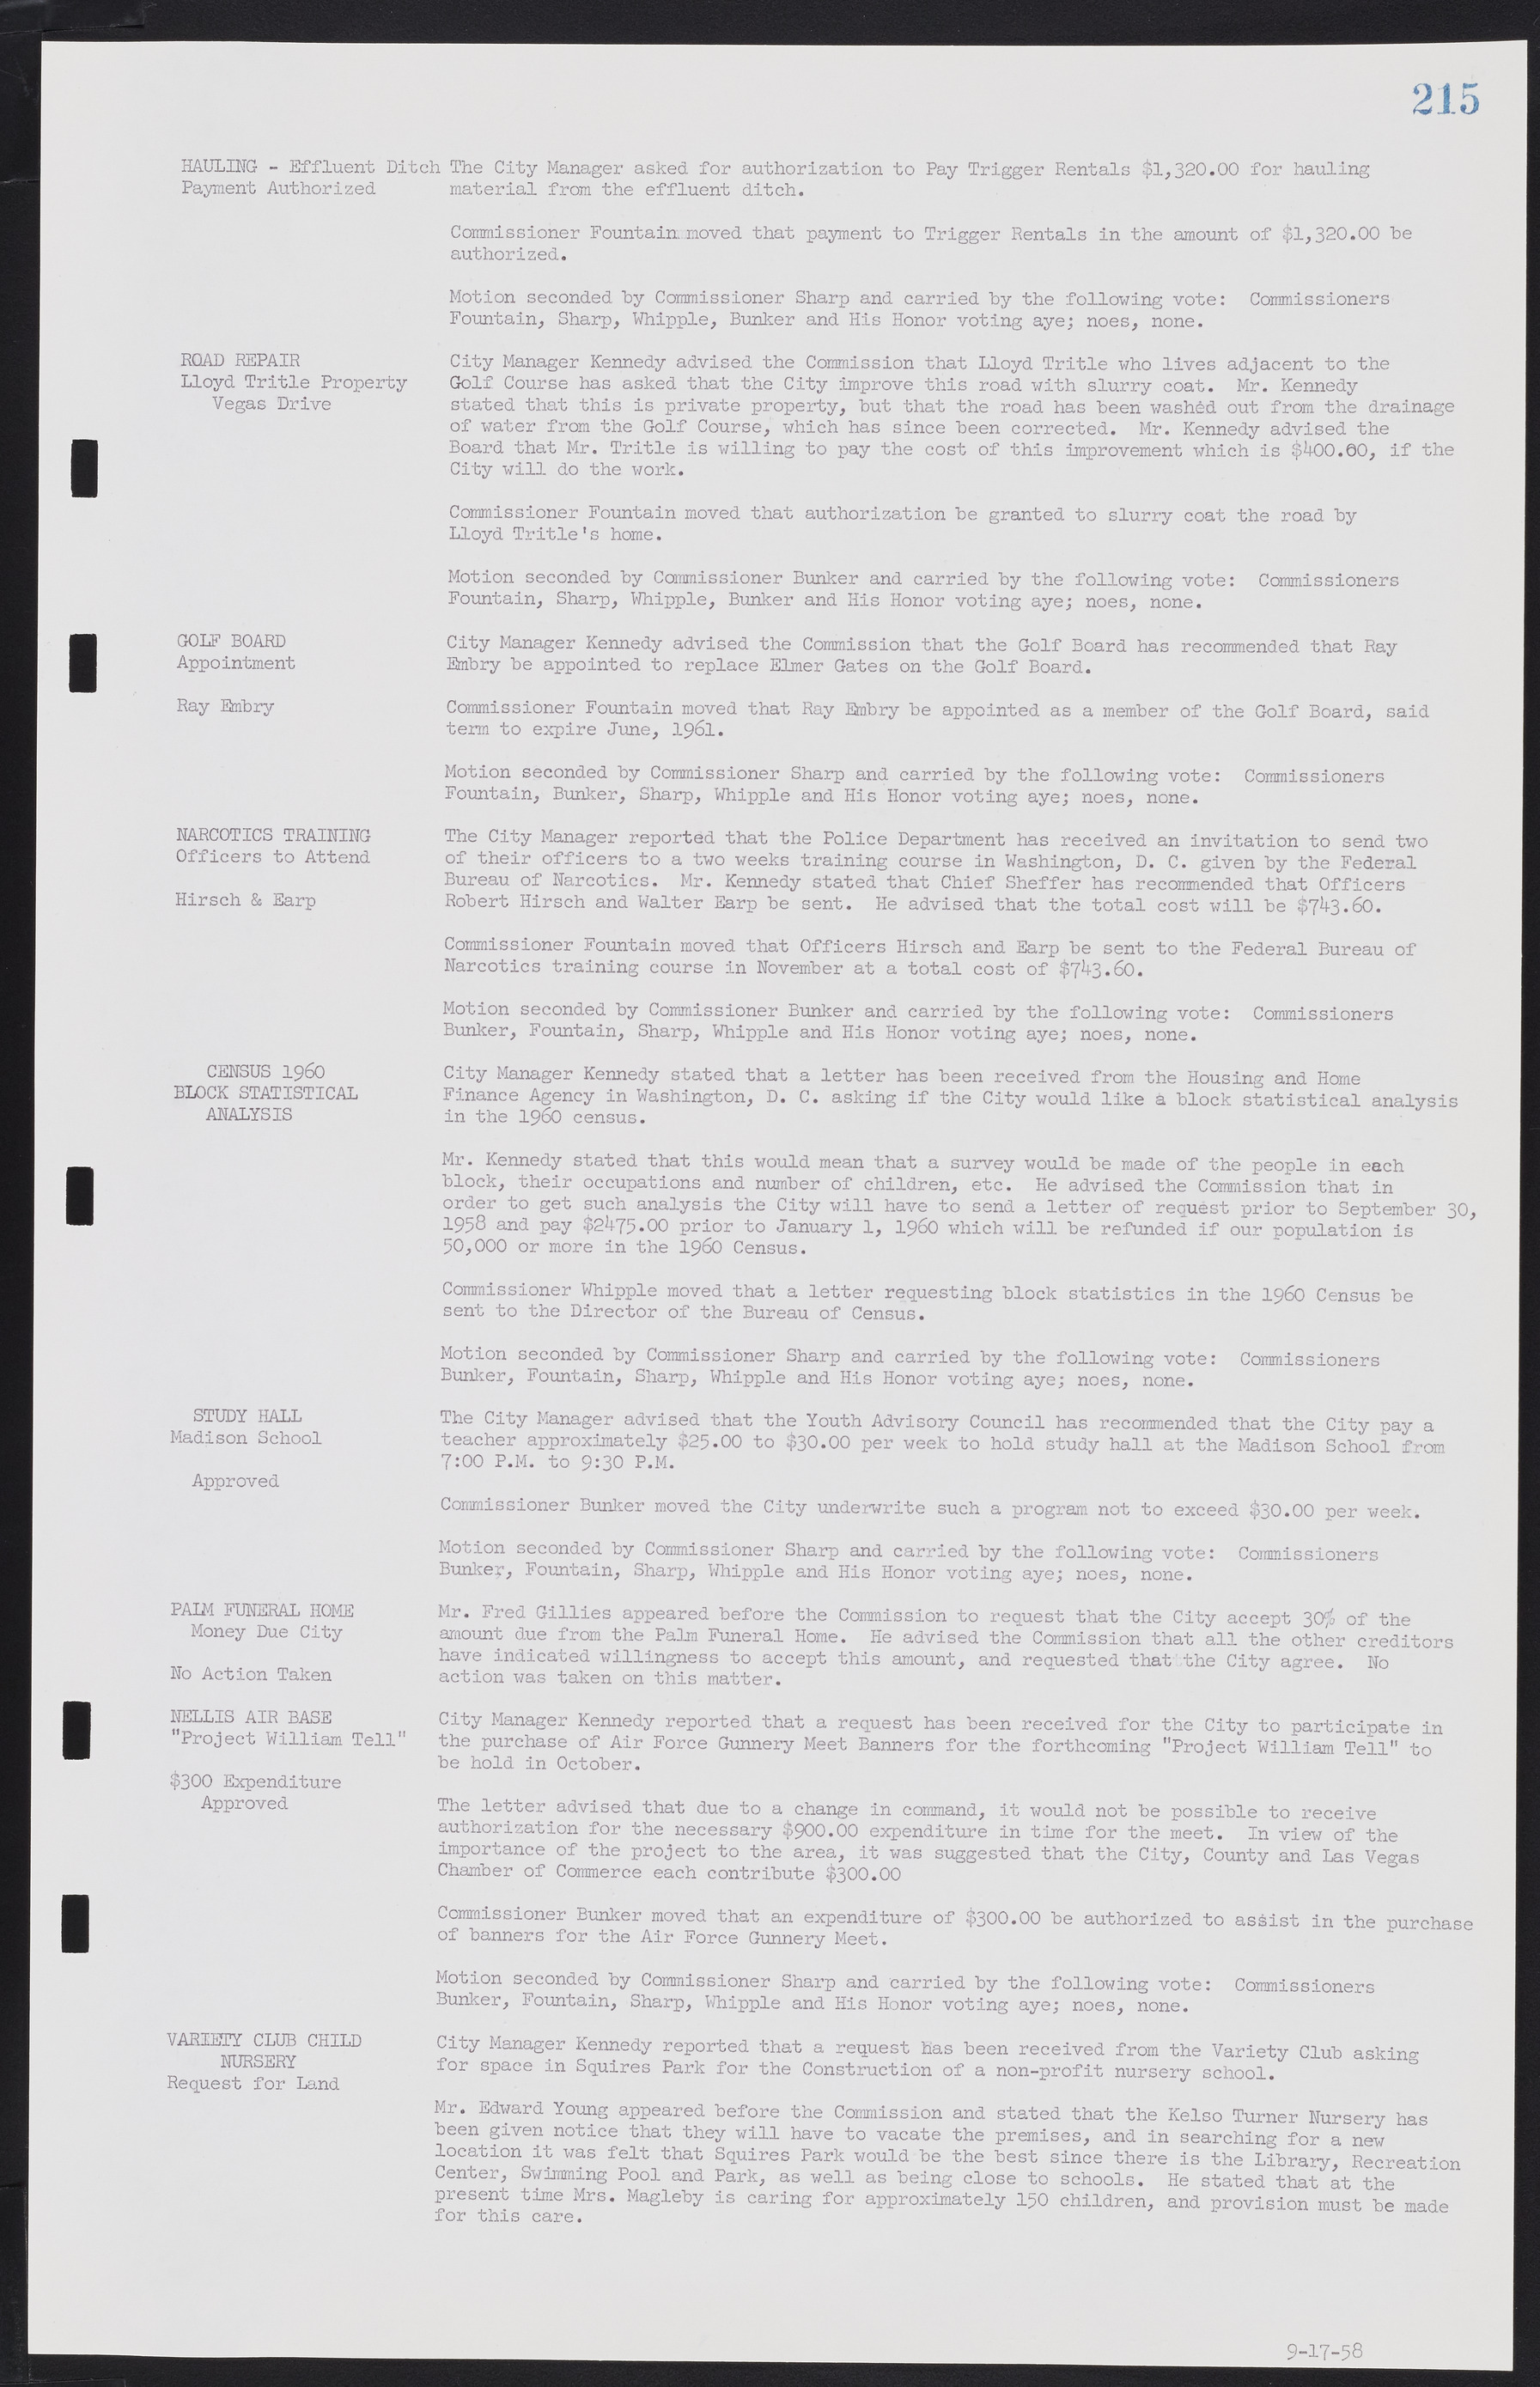 Las Vegas City Commission Minutes, November 20, 1957 to December 2, 1959, lvc000011-219